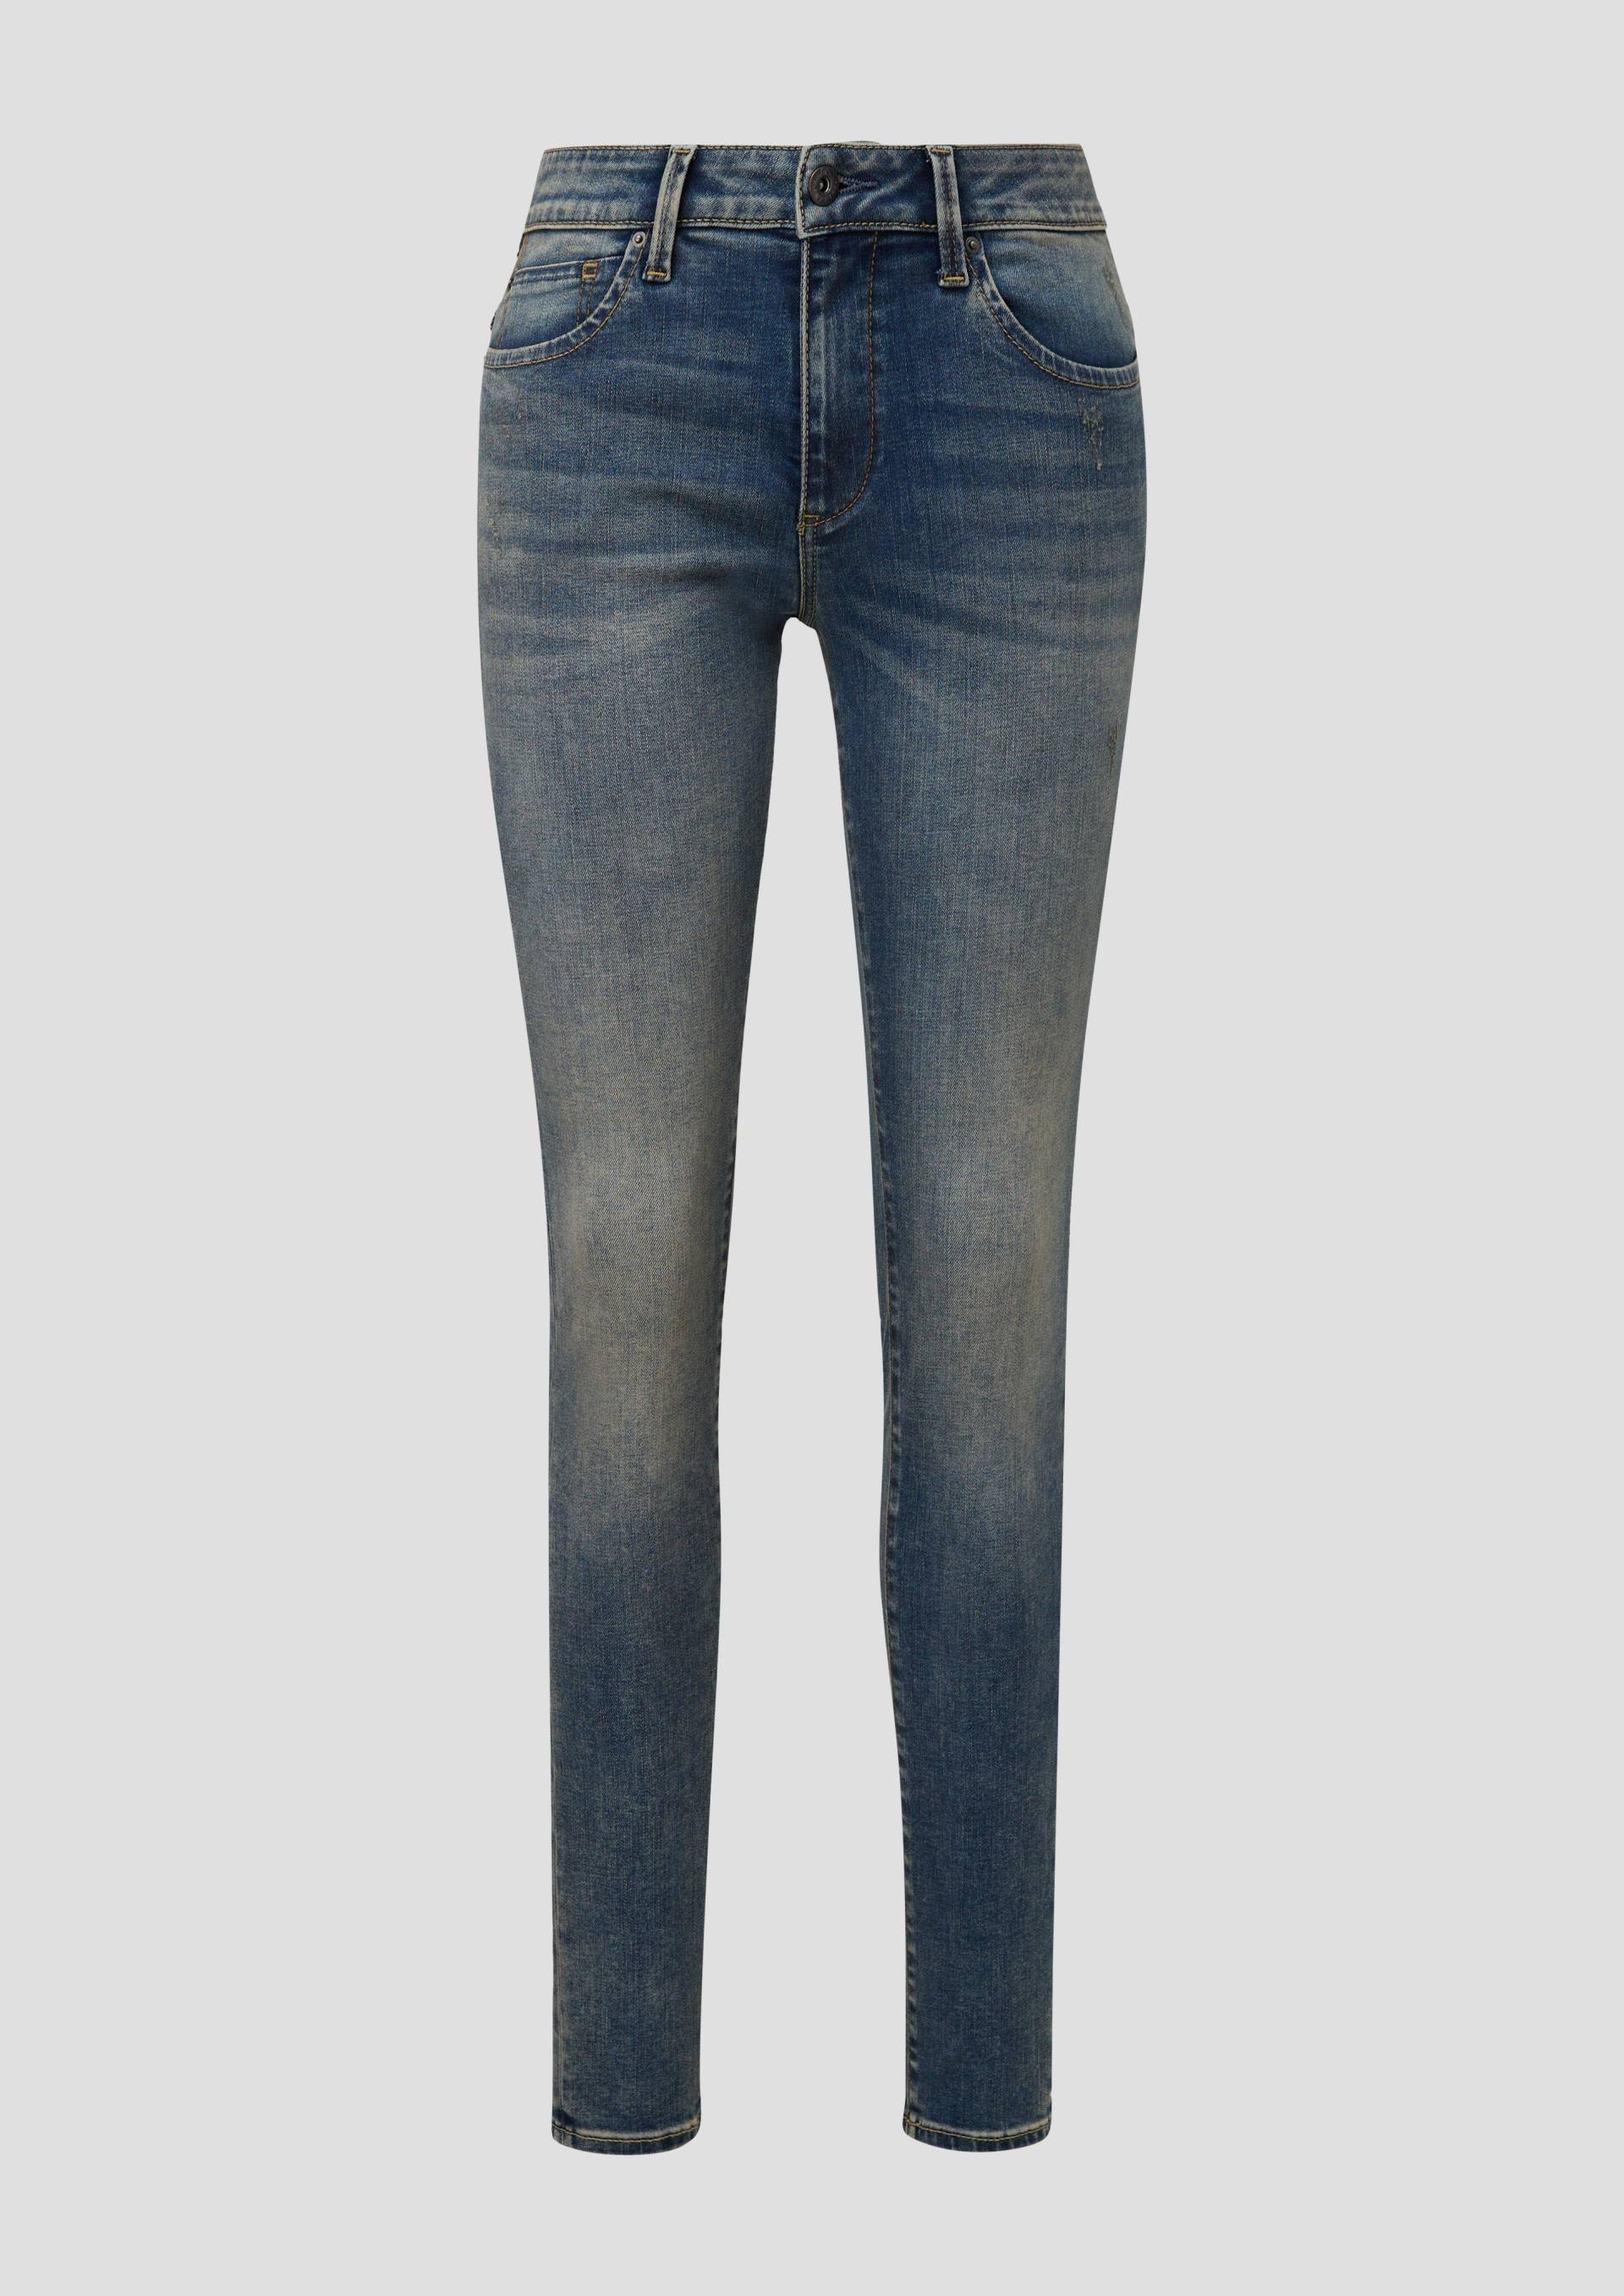 QS - Jeans Sadie / Skinny fit / Mid rise / Skinny leg, Damen, blau von QS